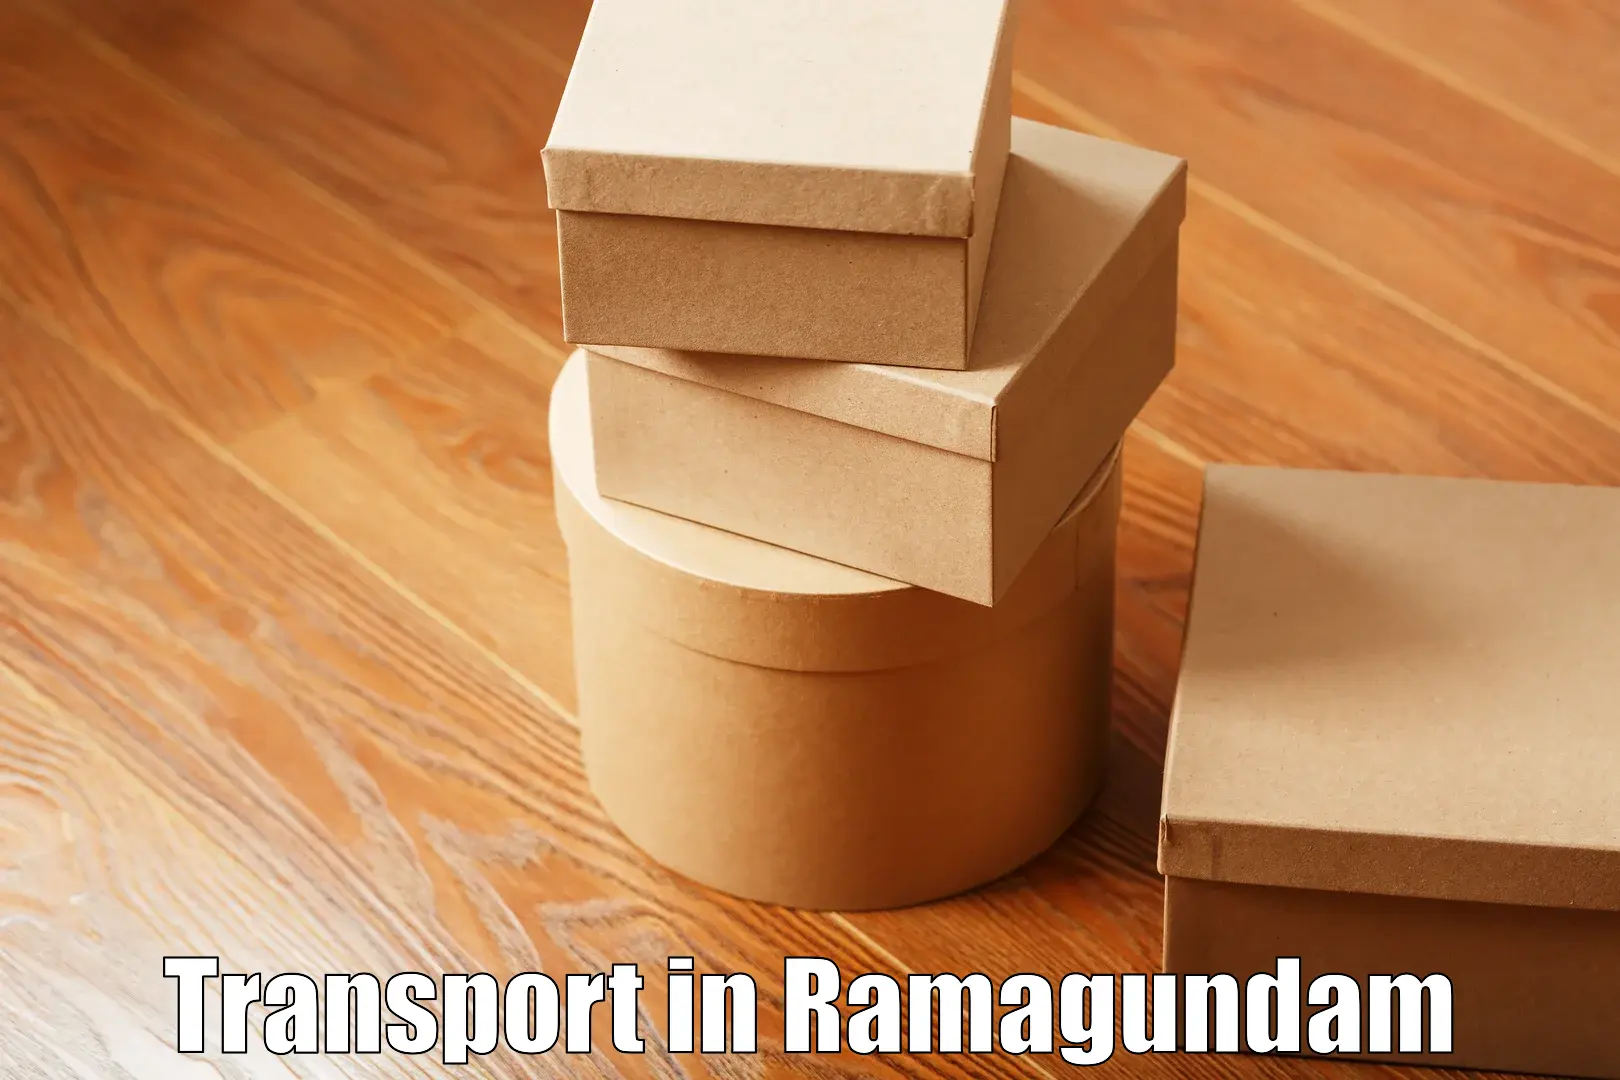 Intercity transport in Ramagundam